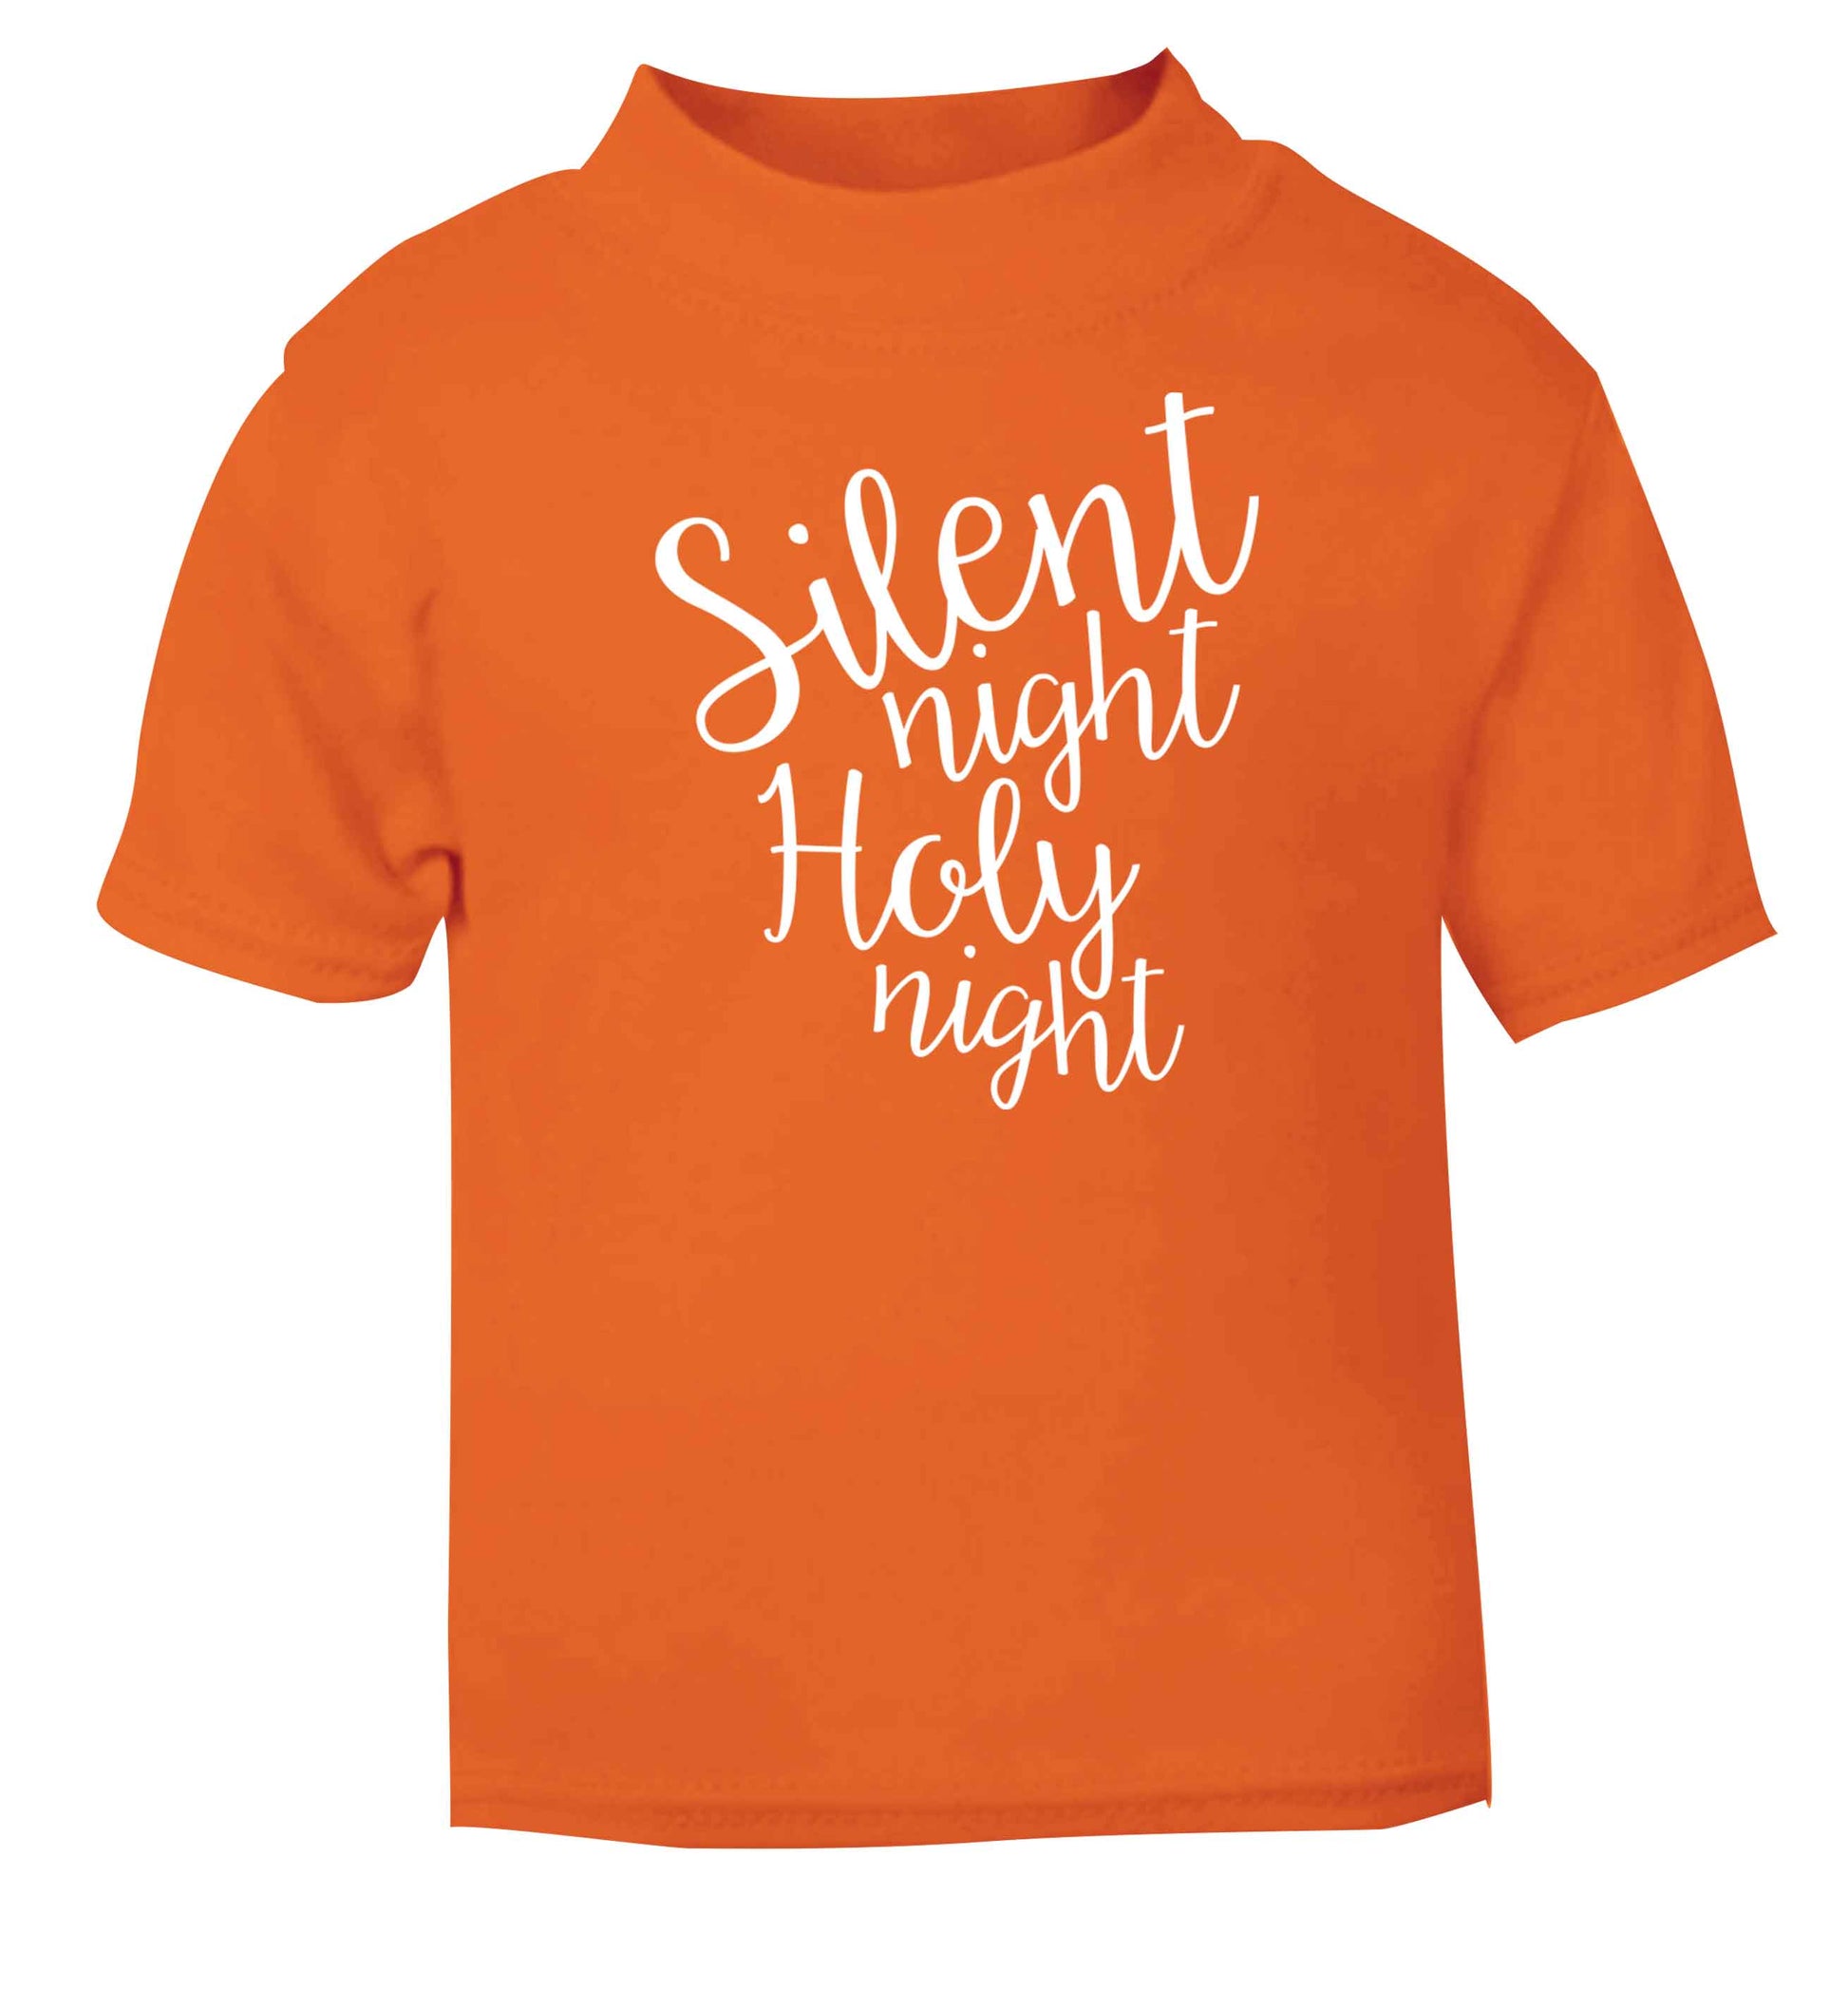 Silent night holy night orange baby toddler Tshirt 2 Years